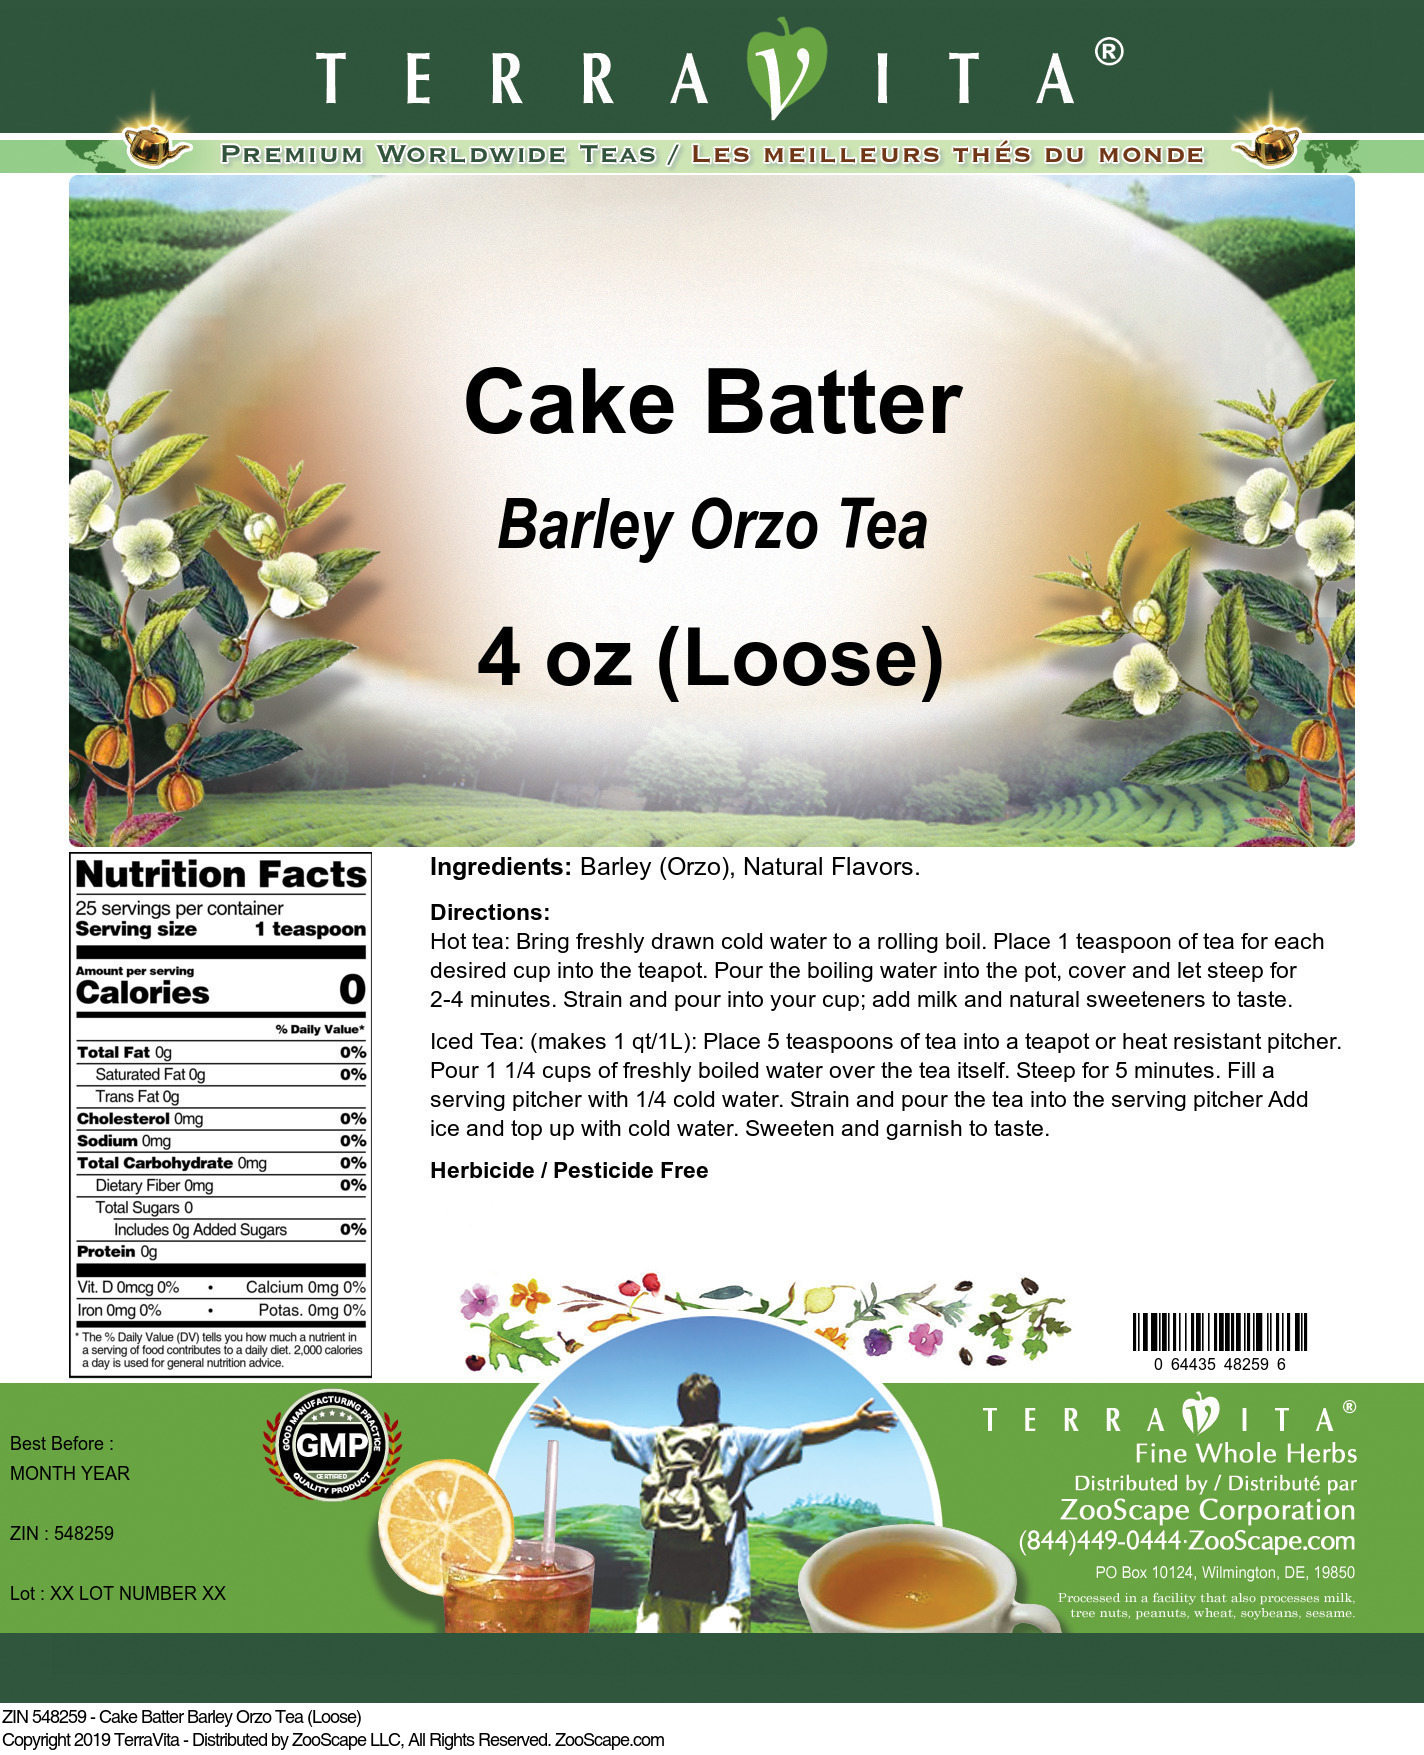 Cake Batter Barley Orzo Tea (Loose) - Label